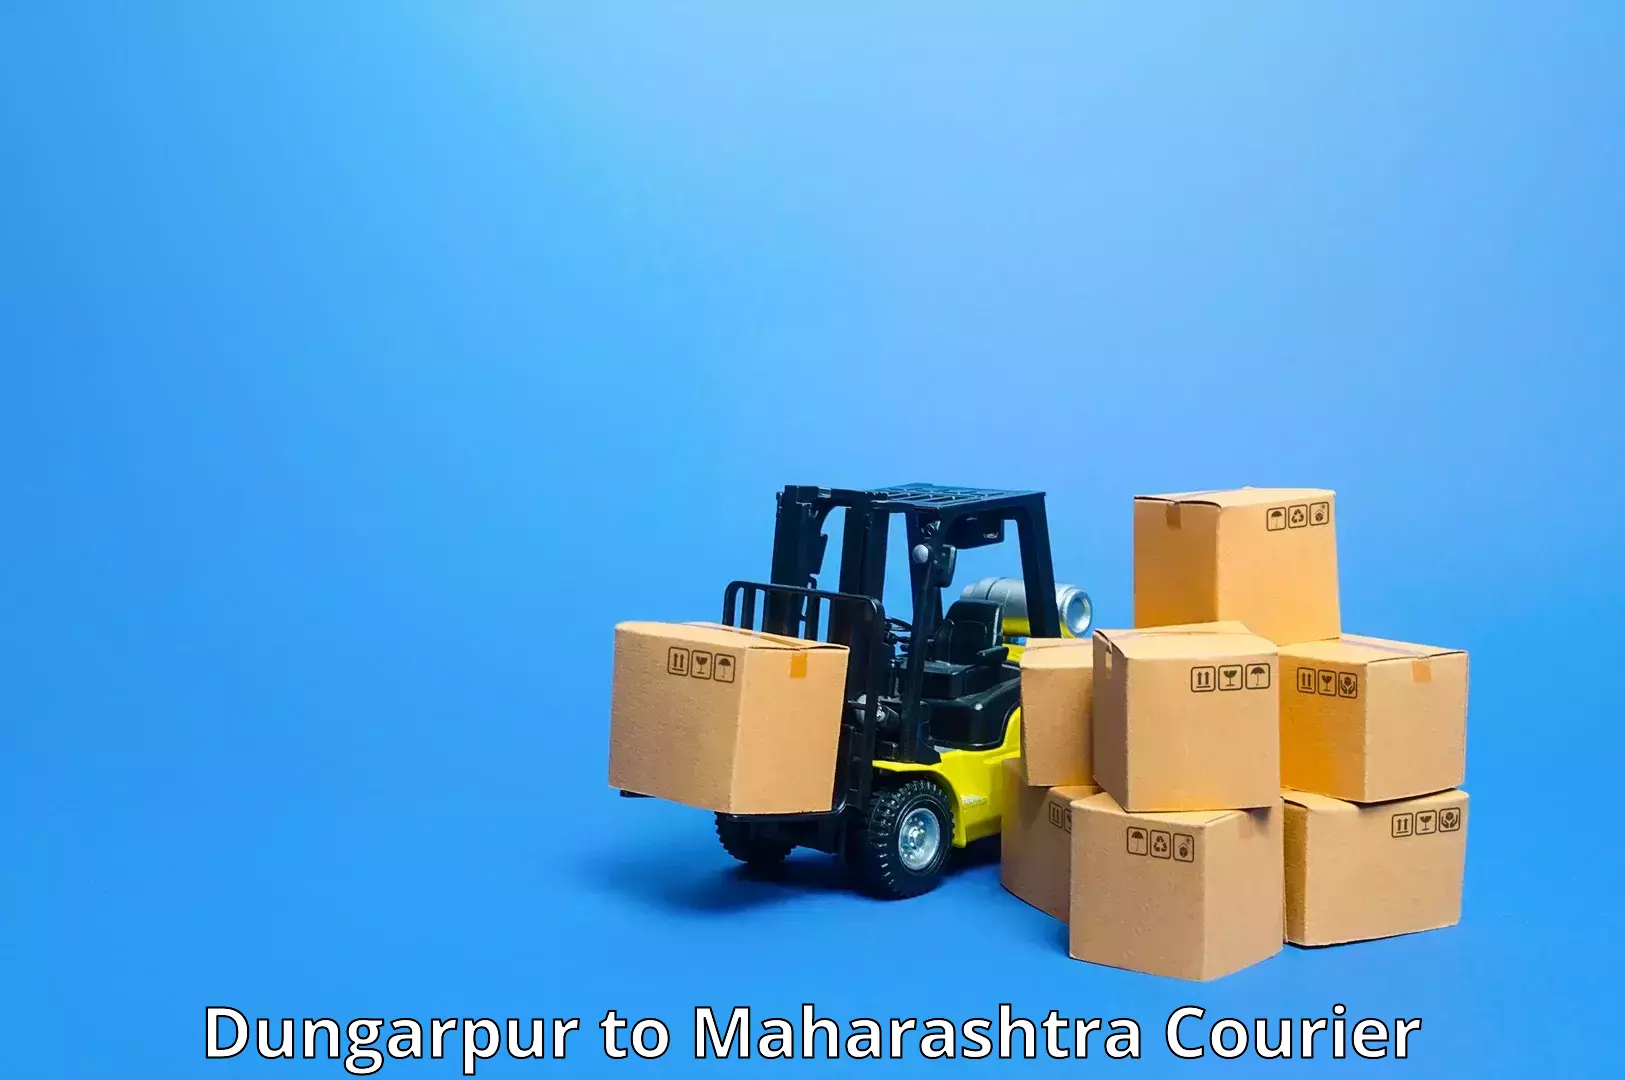 Advanced shipping technology Dungarpur to Pusad